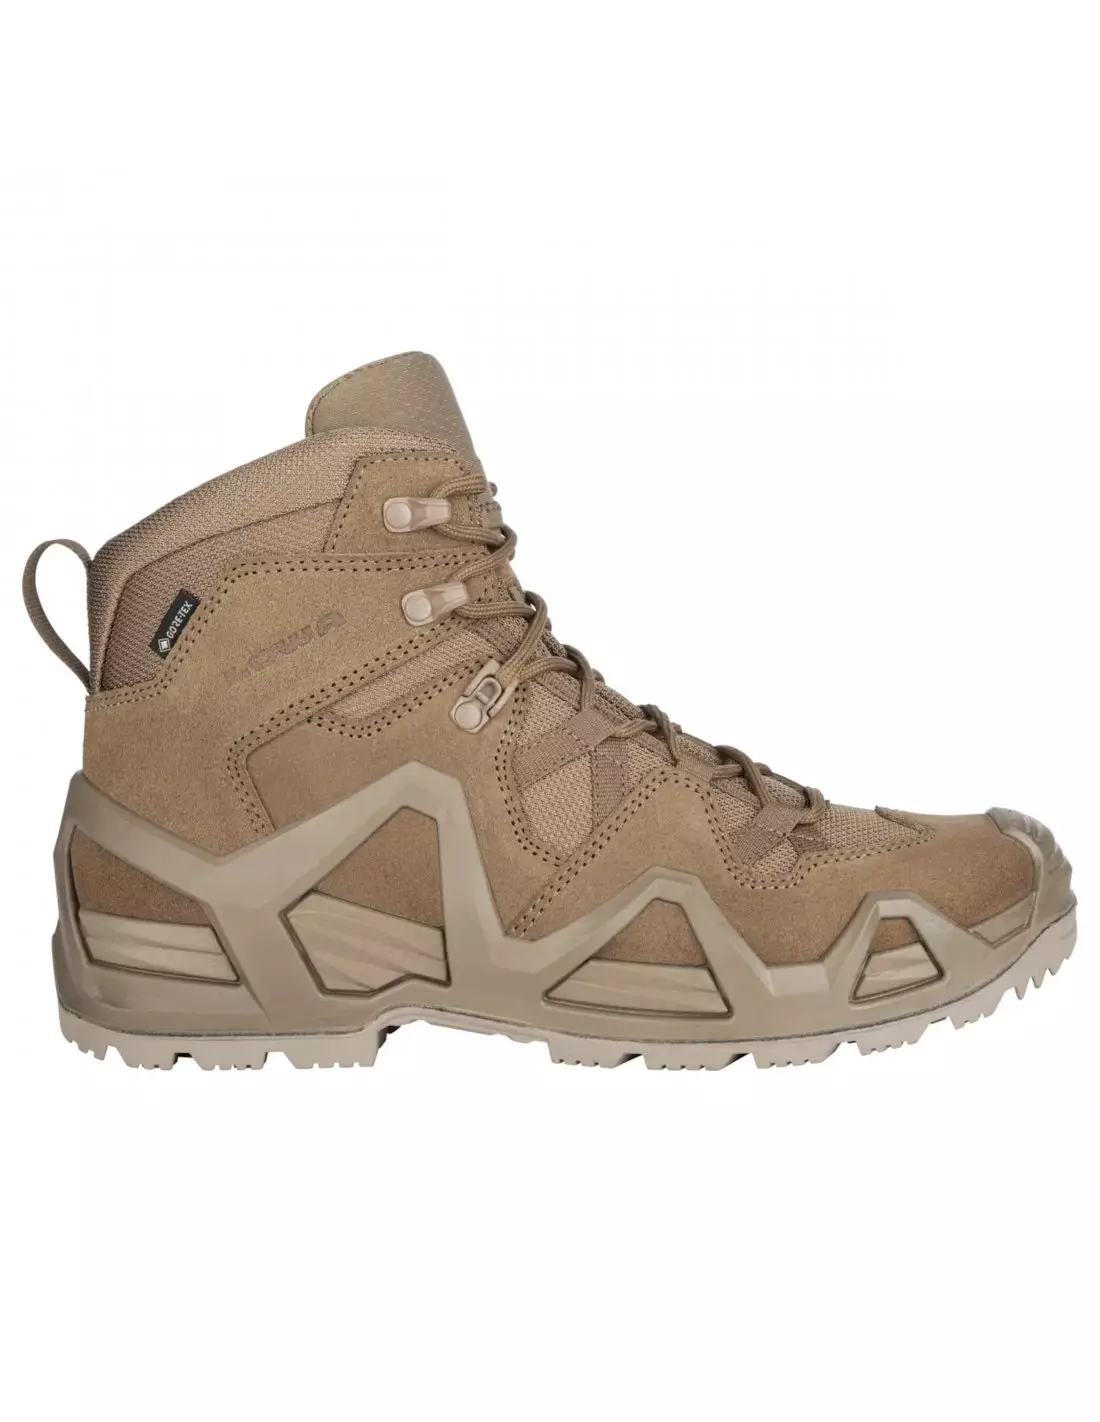 LOWA® ZEPHYR MK2 GTX MID Tactical Boots - Coyote OP